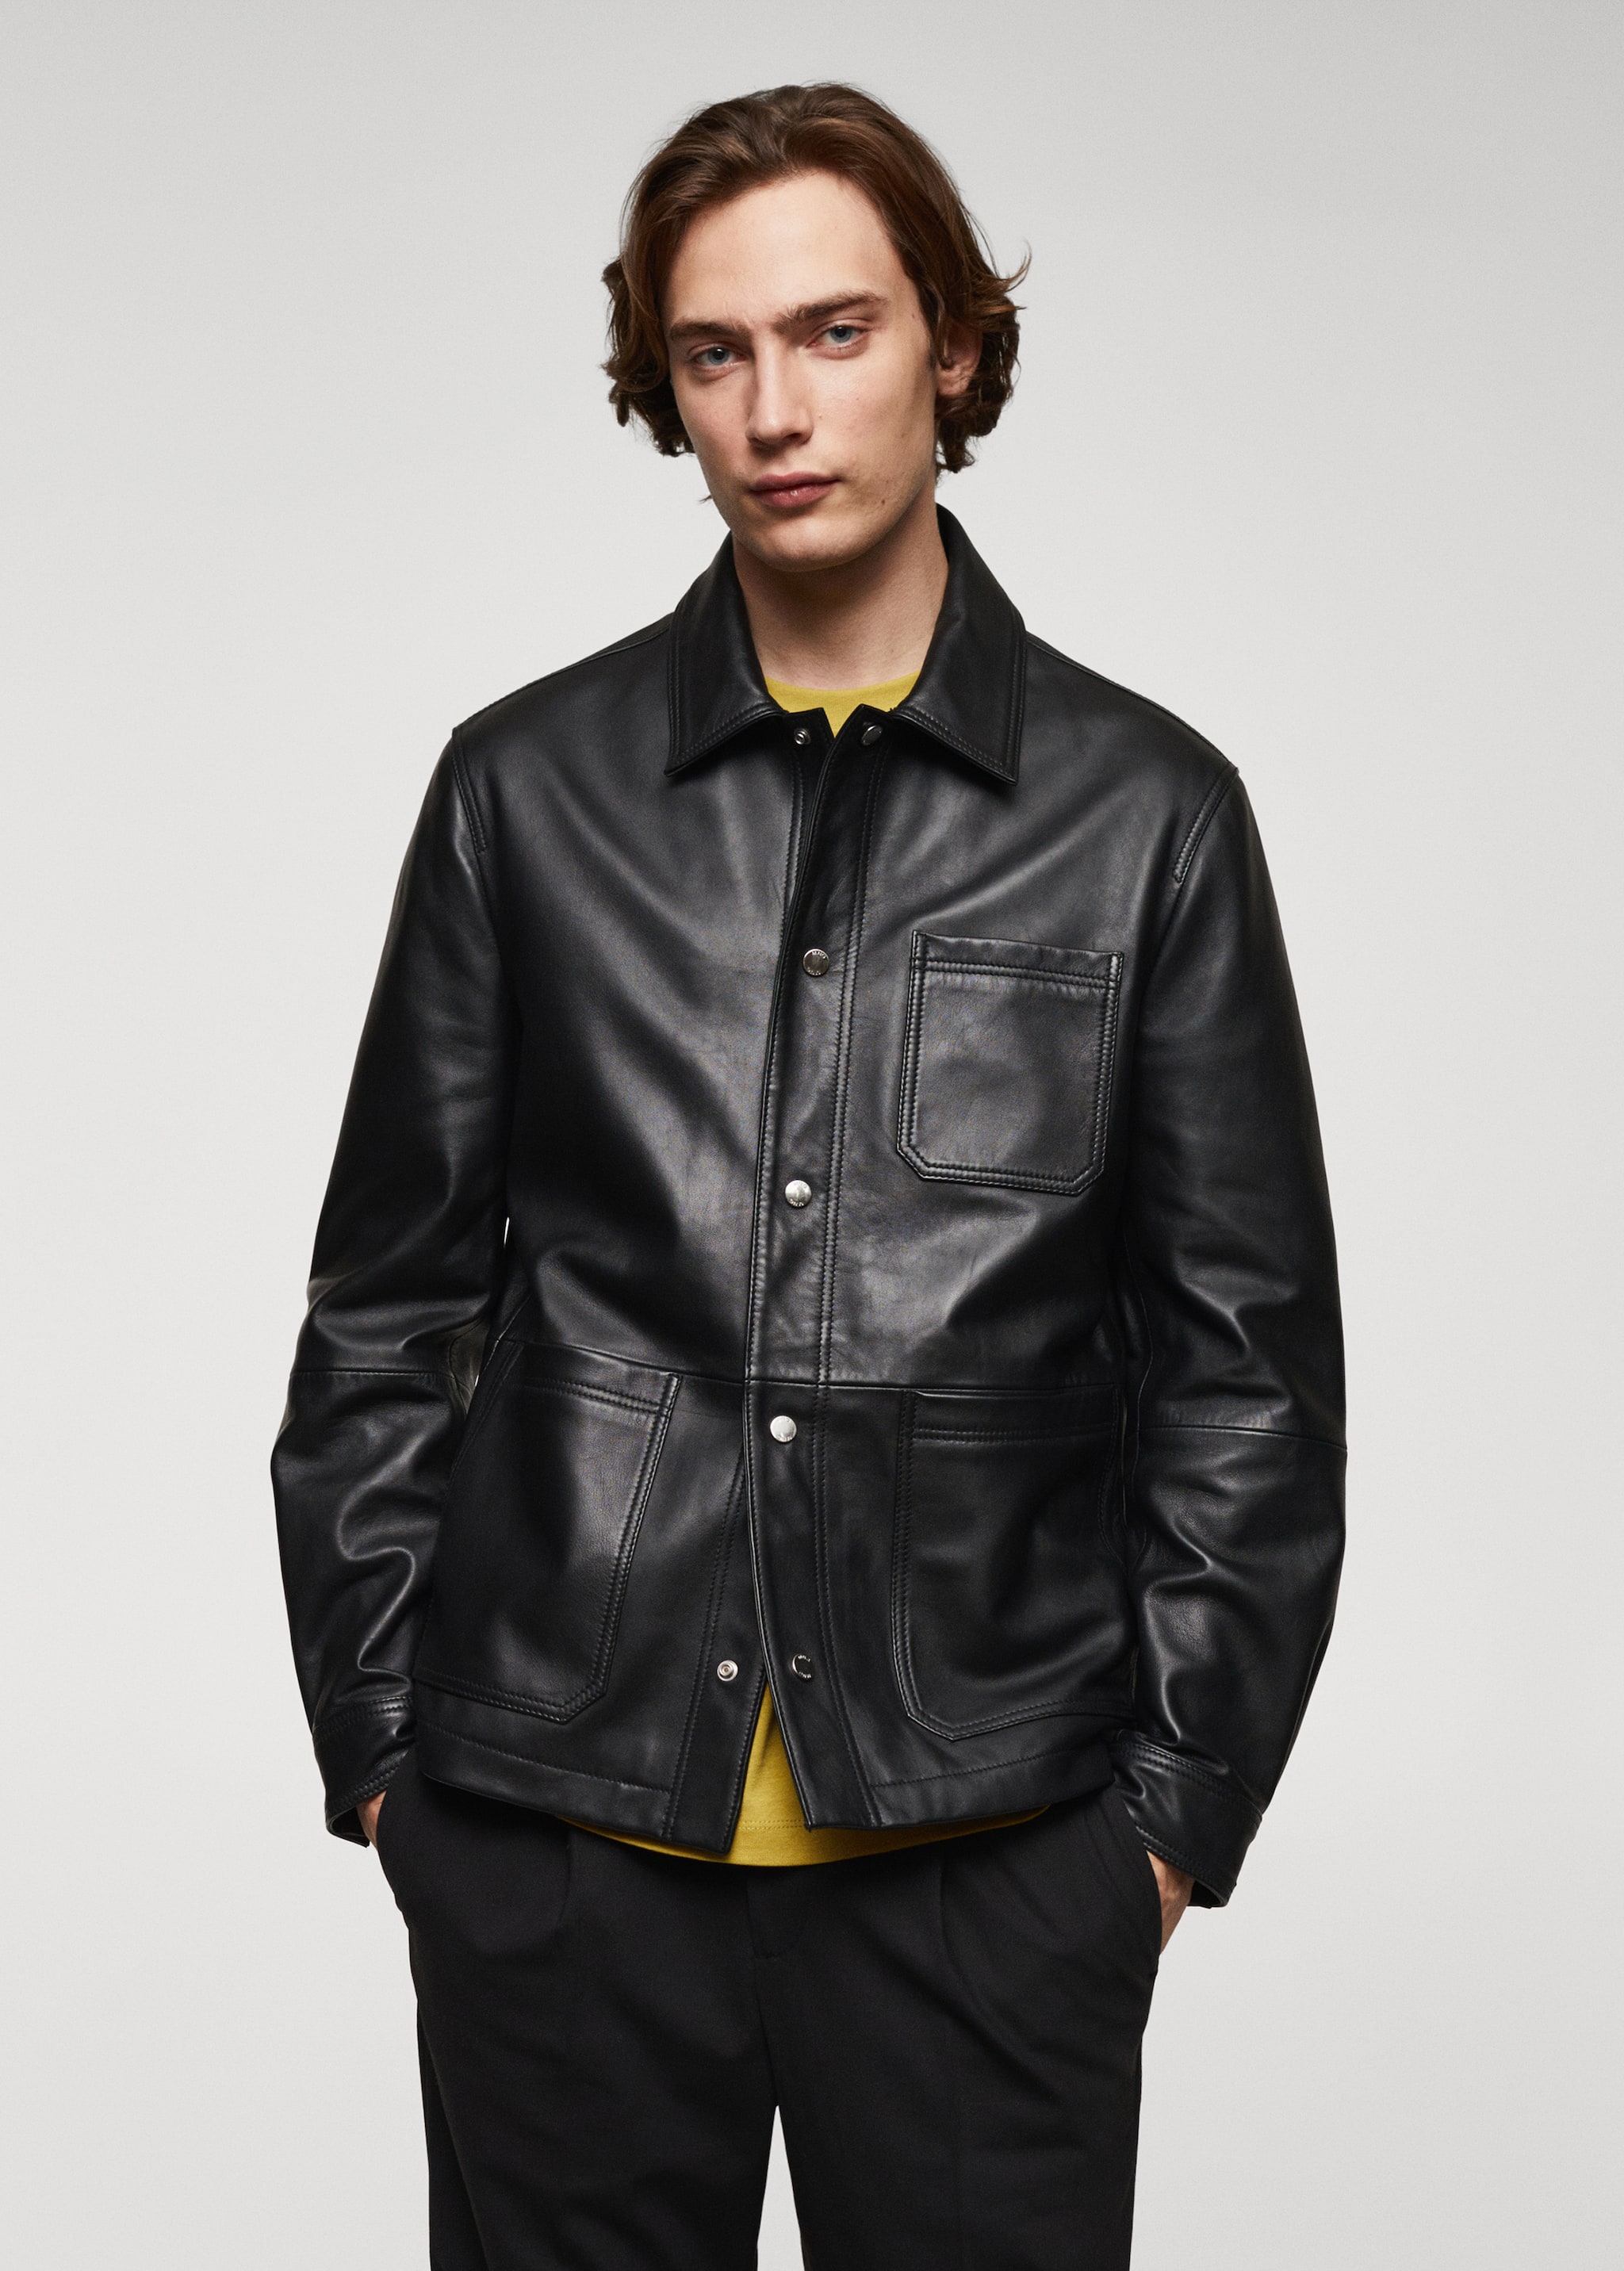 100% nappa leather jacket - Medium plane